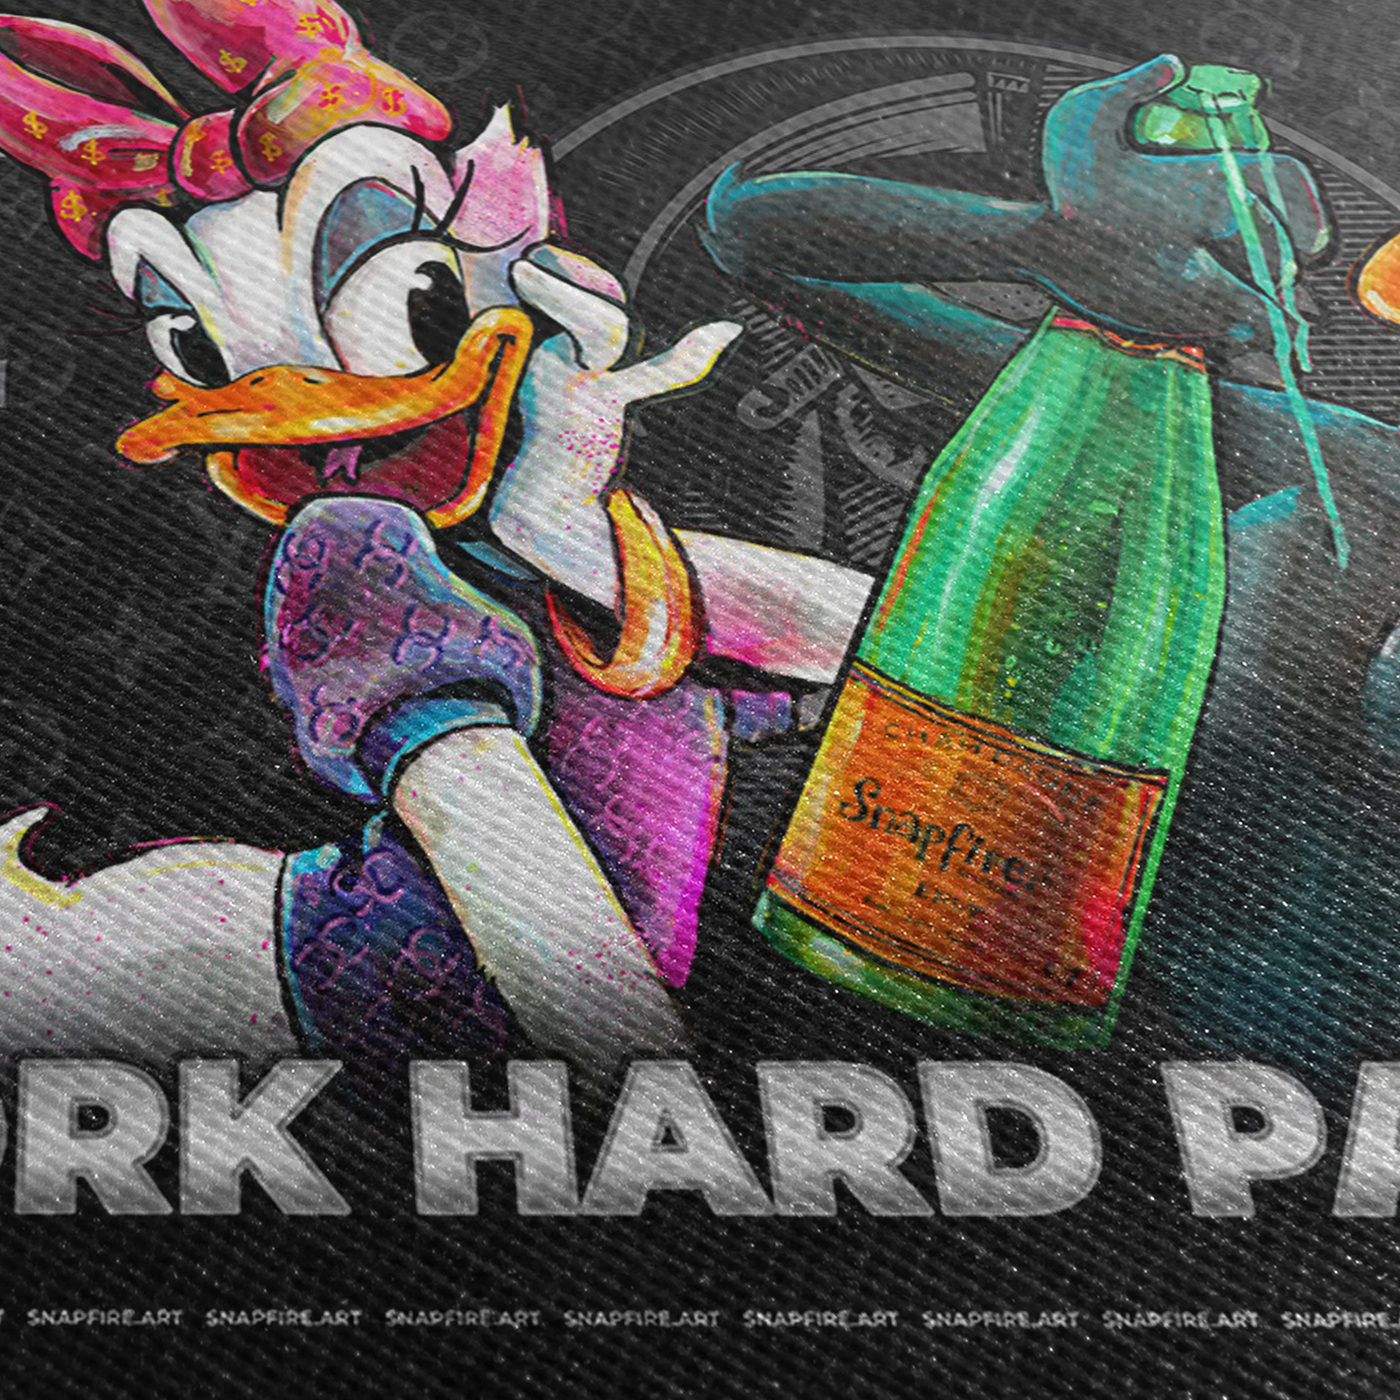 Work Hard Party Hard - Black Edition